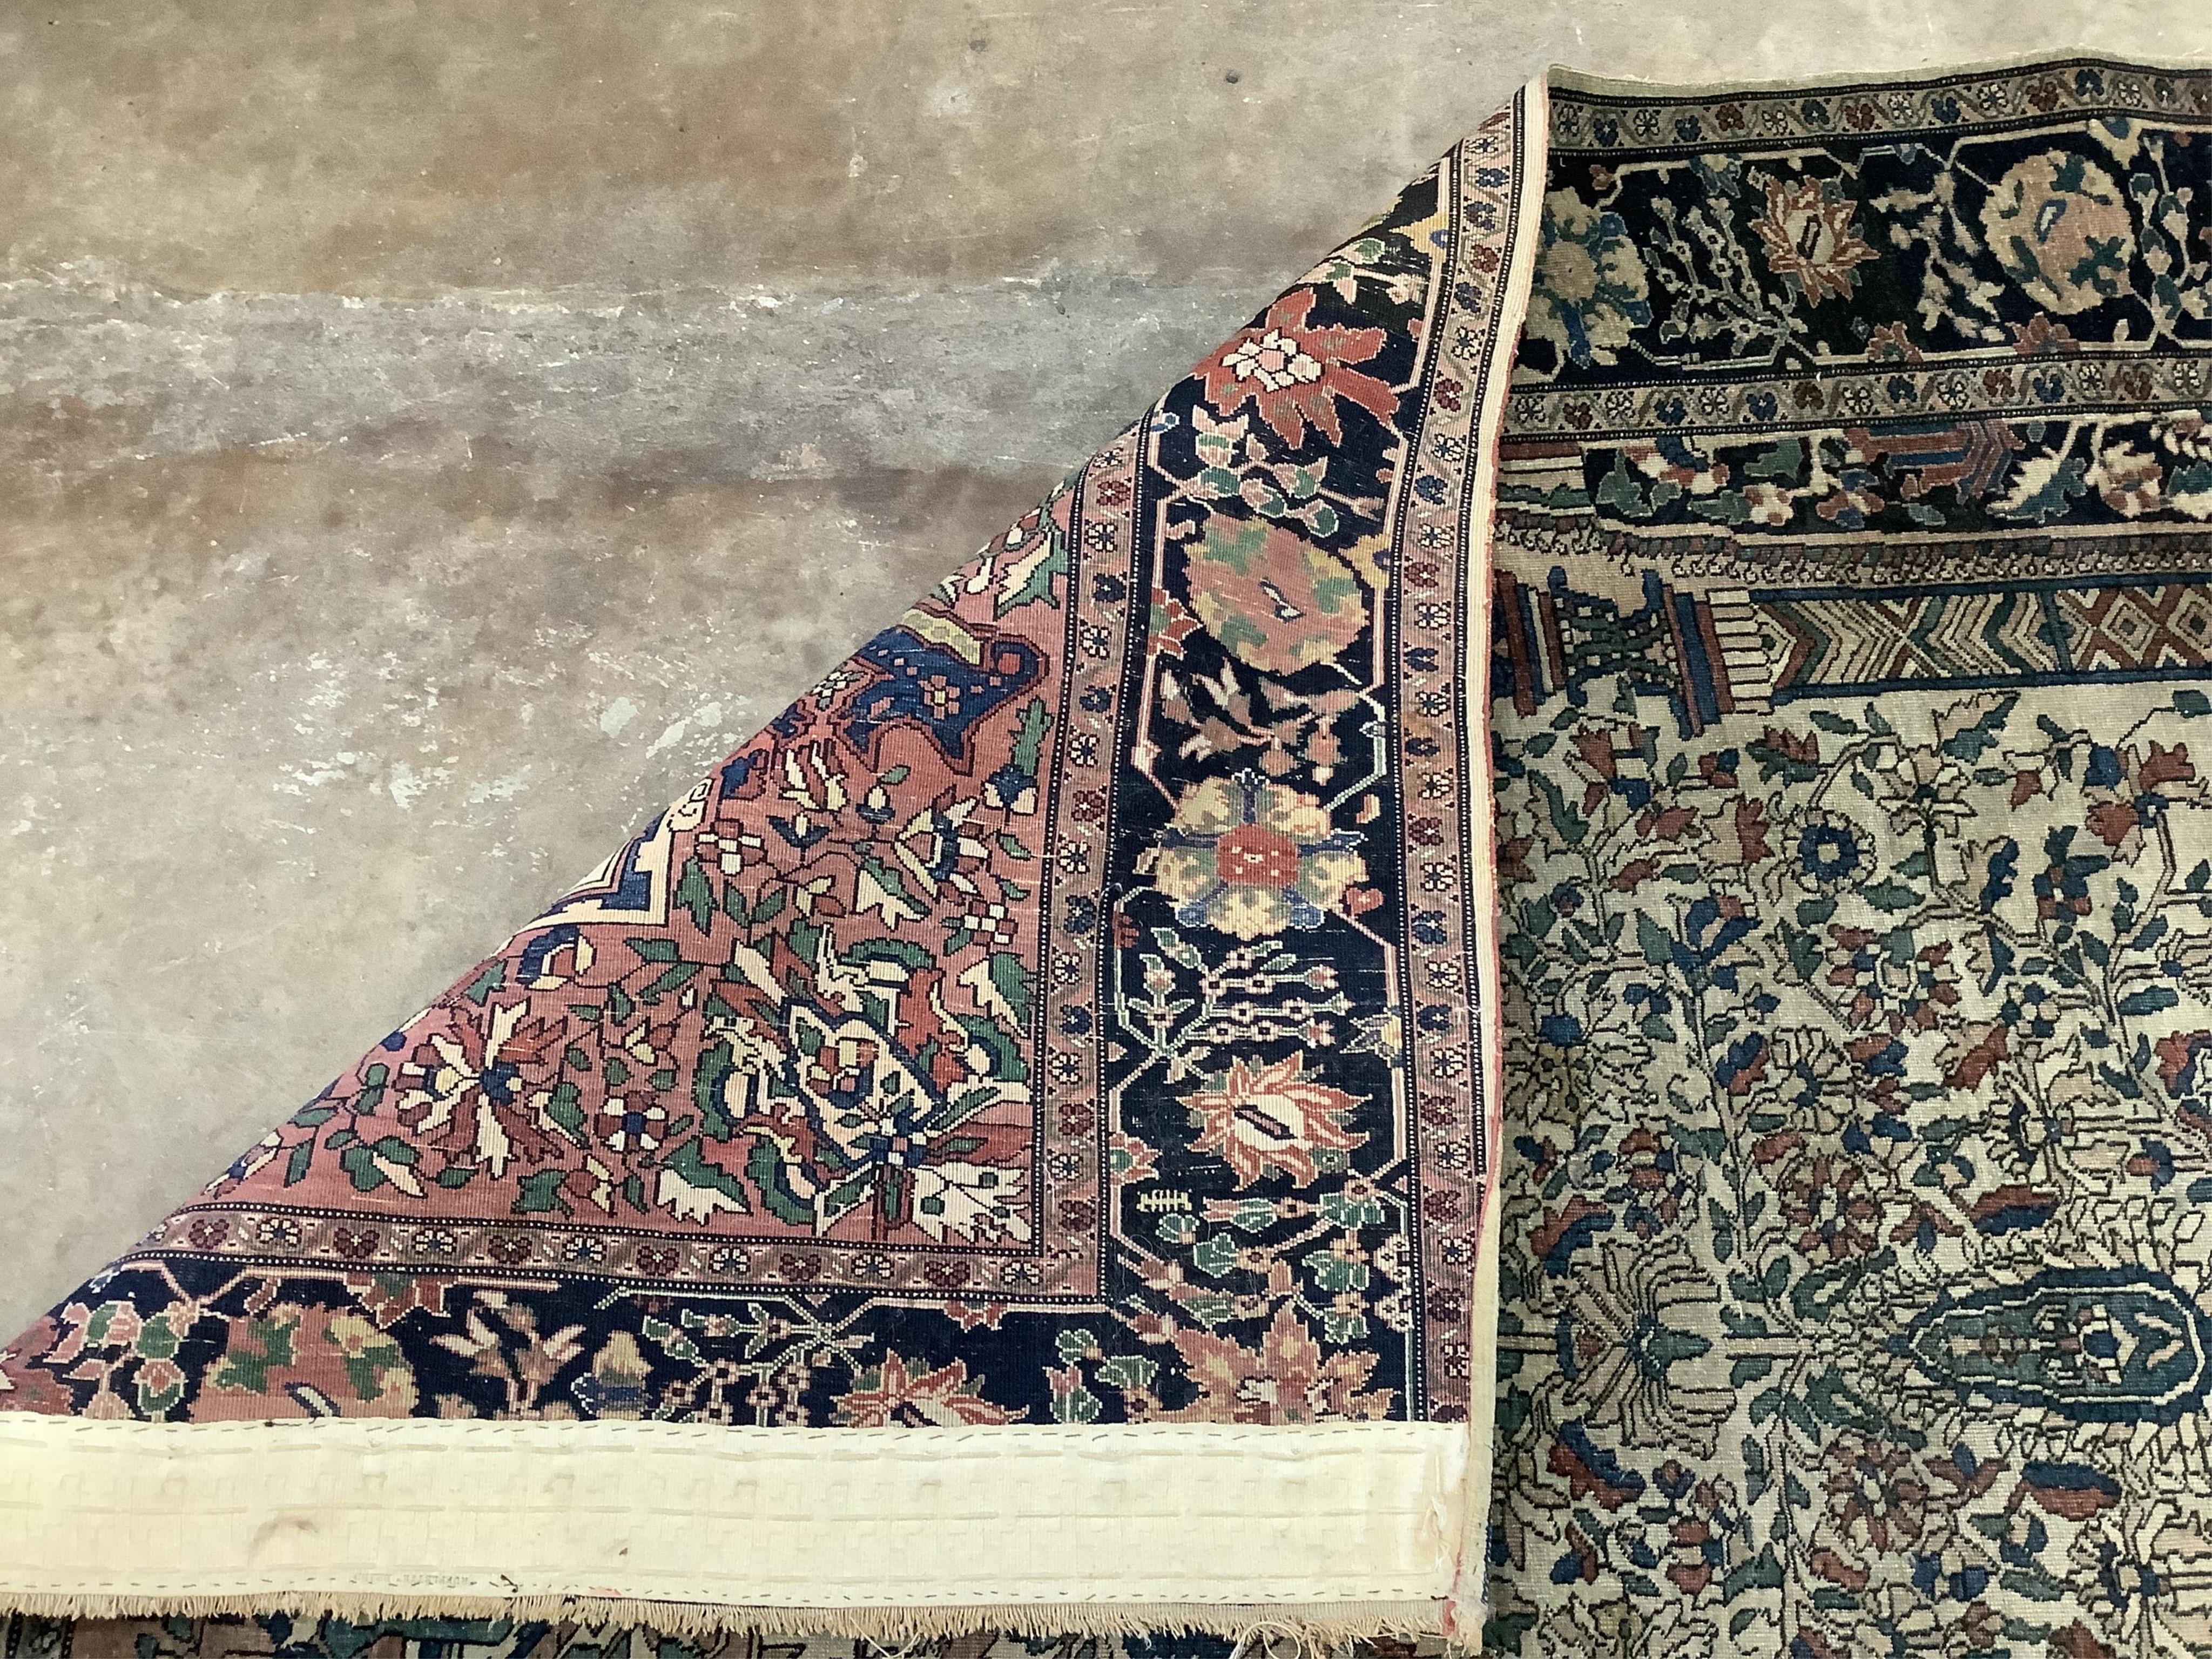 An Isphahan tree of life prayer rug, 192 x 138cm